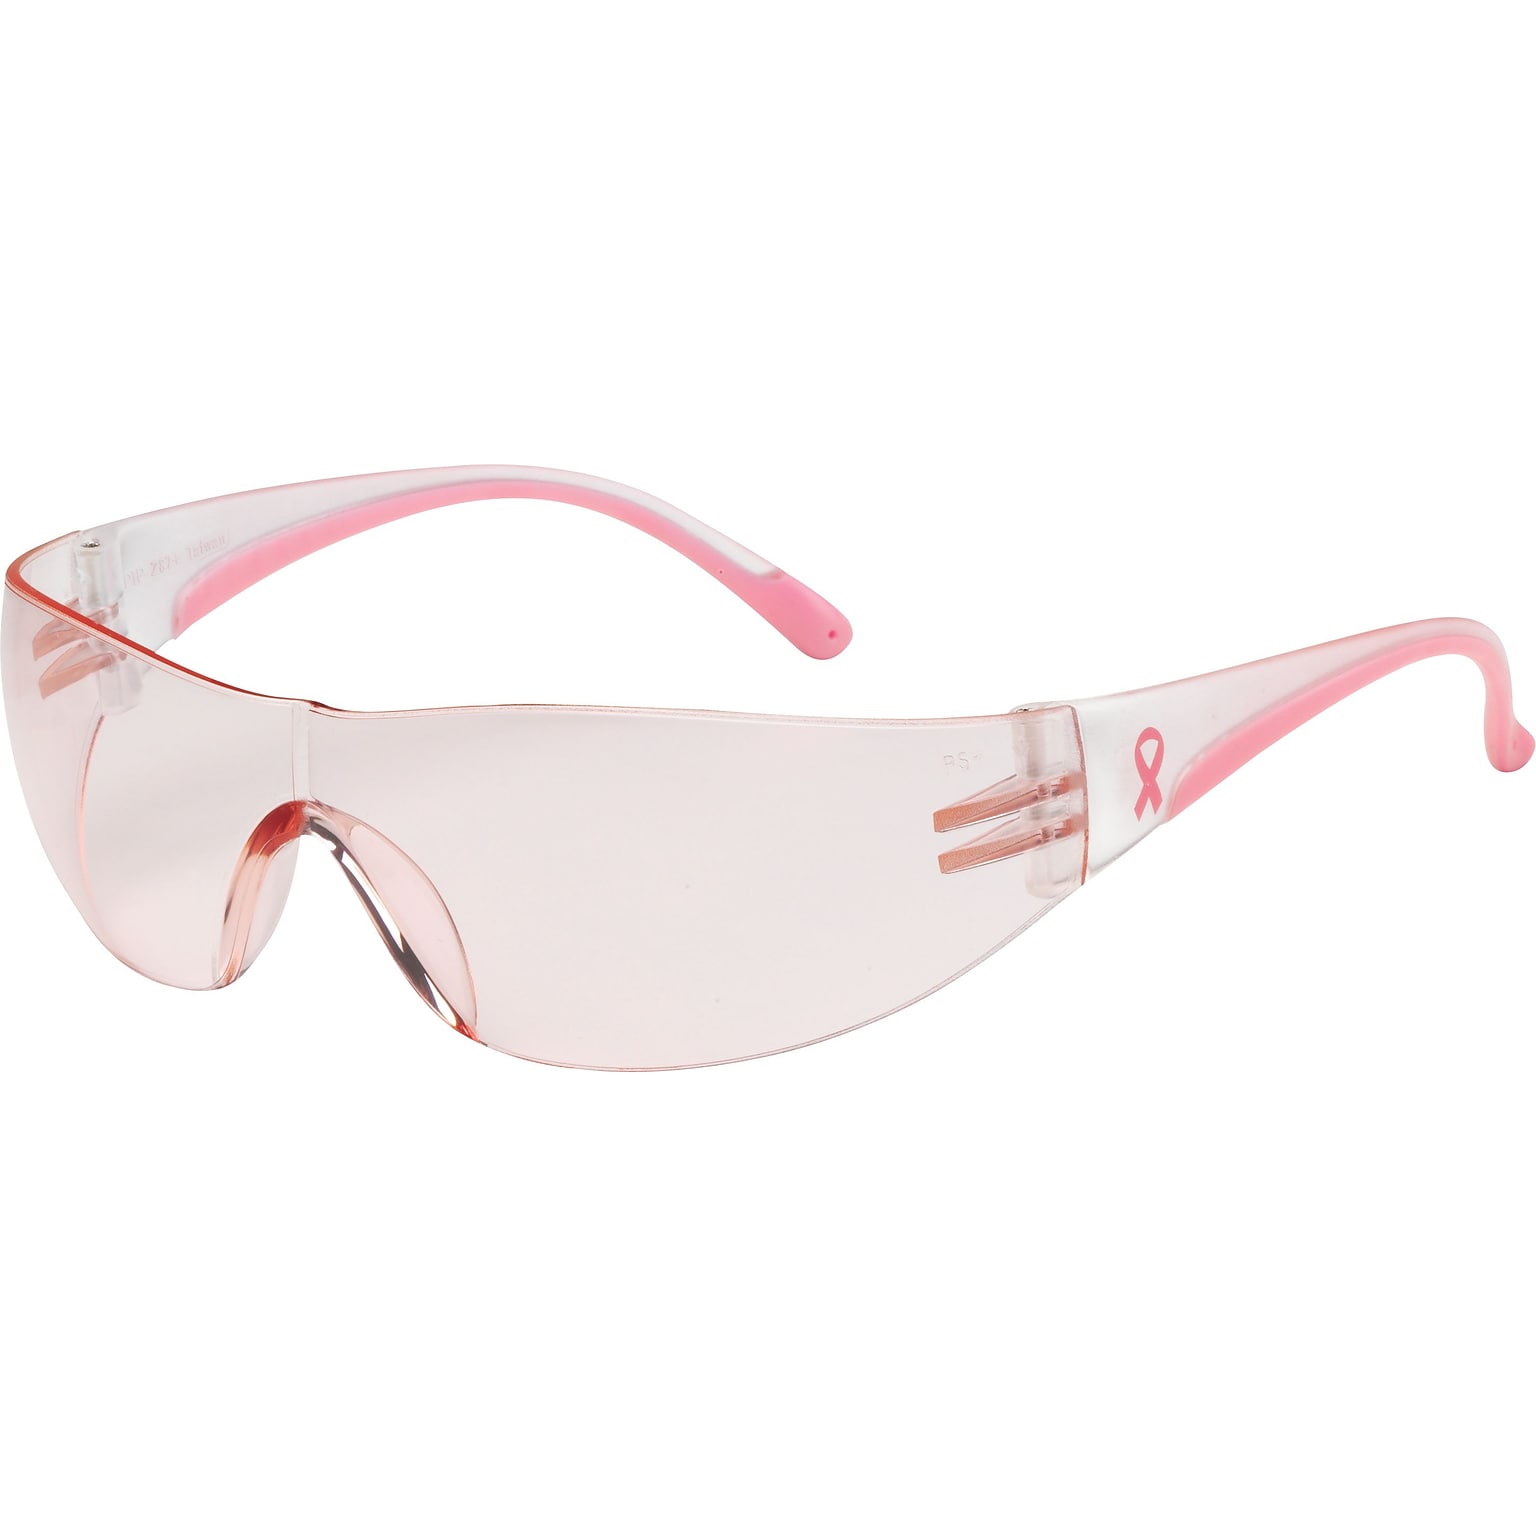 Bouton Optical Safety Glasses, Eva™, Pink/Clear Frame, Light Pink Lens, Anti-scratch Coating (250-10-0904)